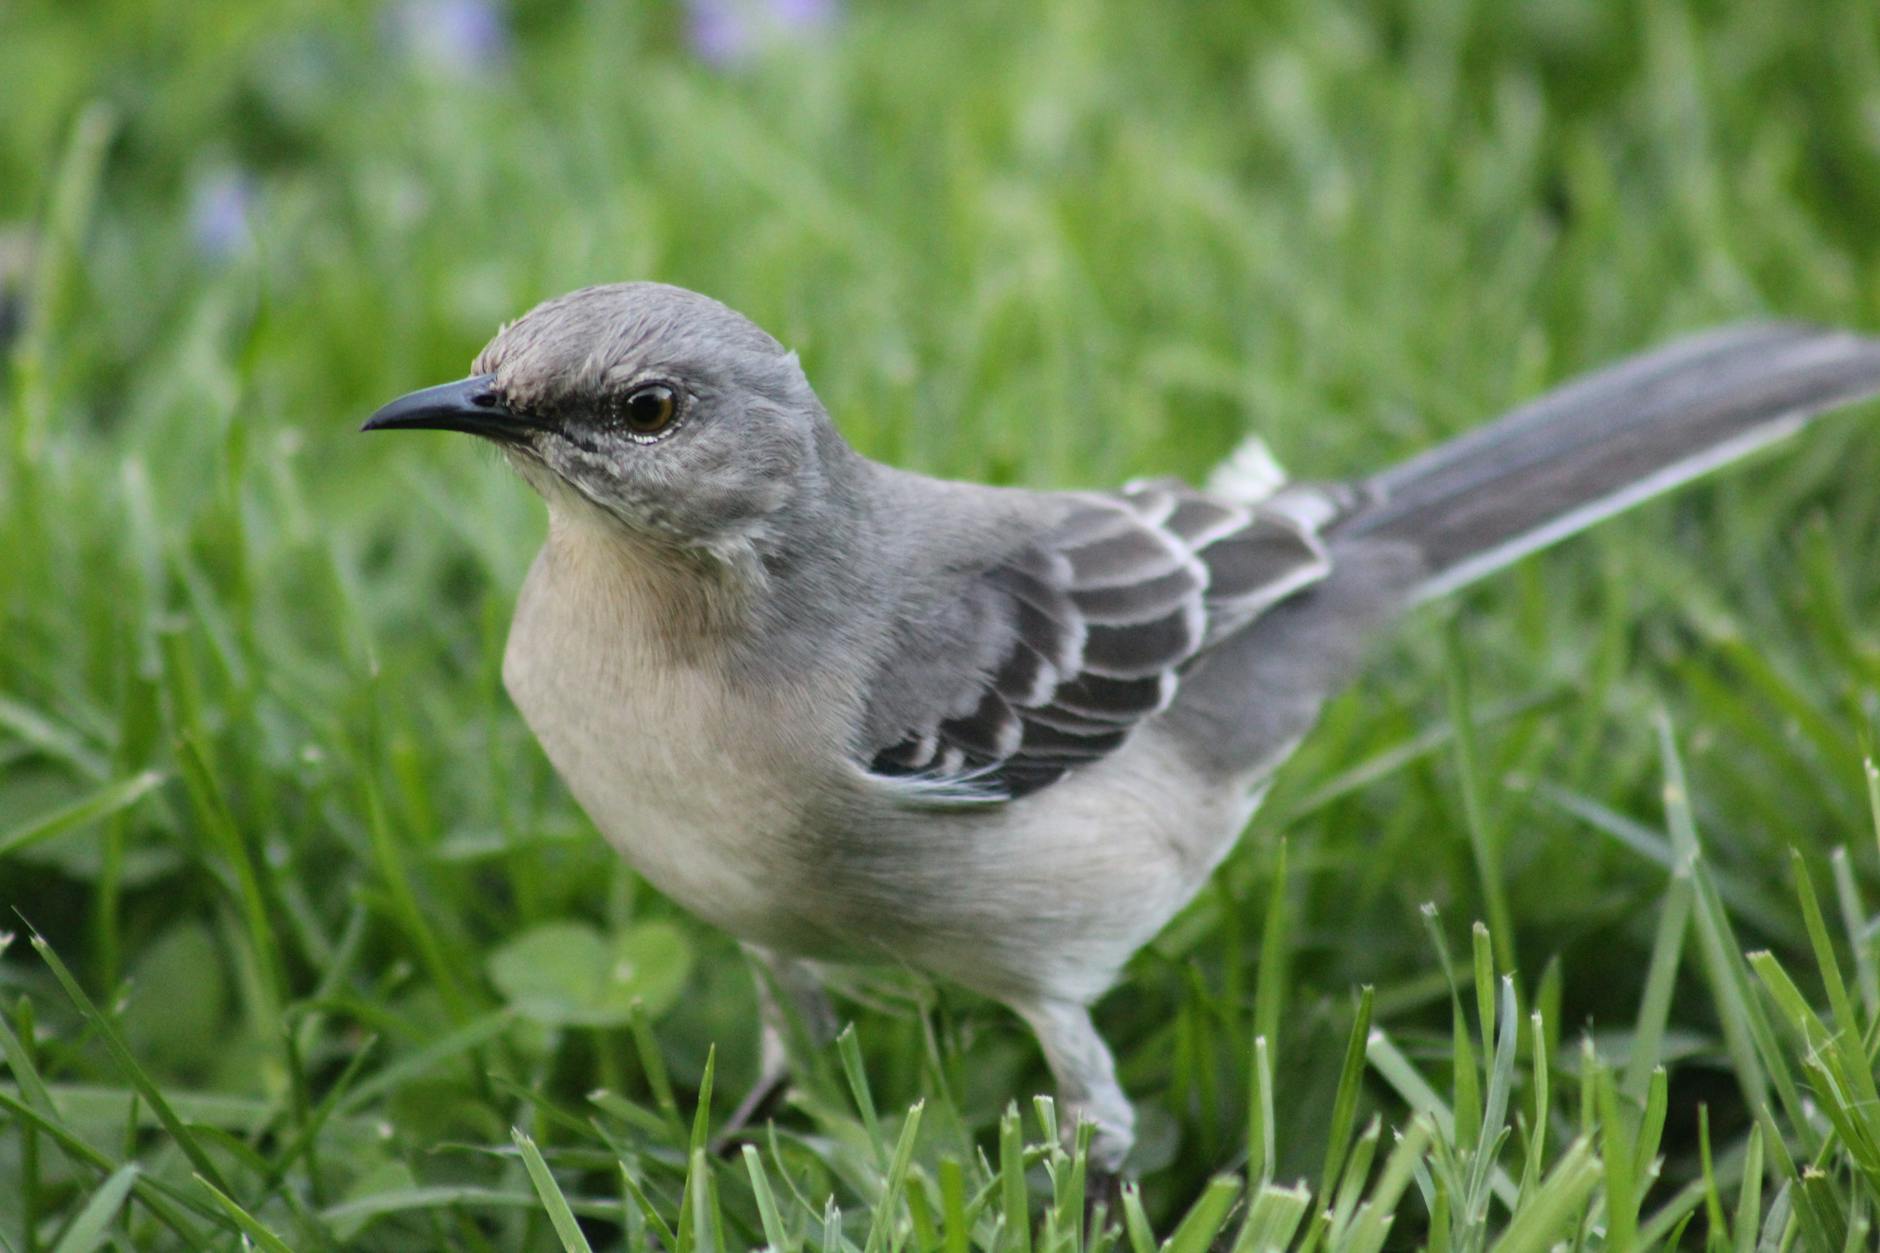 A close up of a gray mockingbird in green grass.